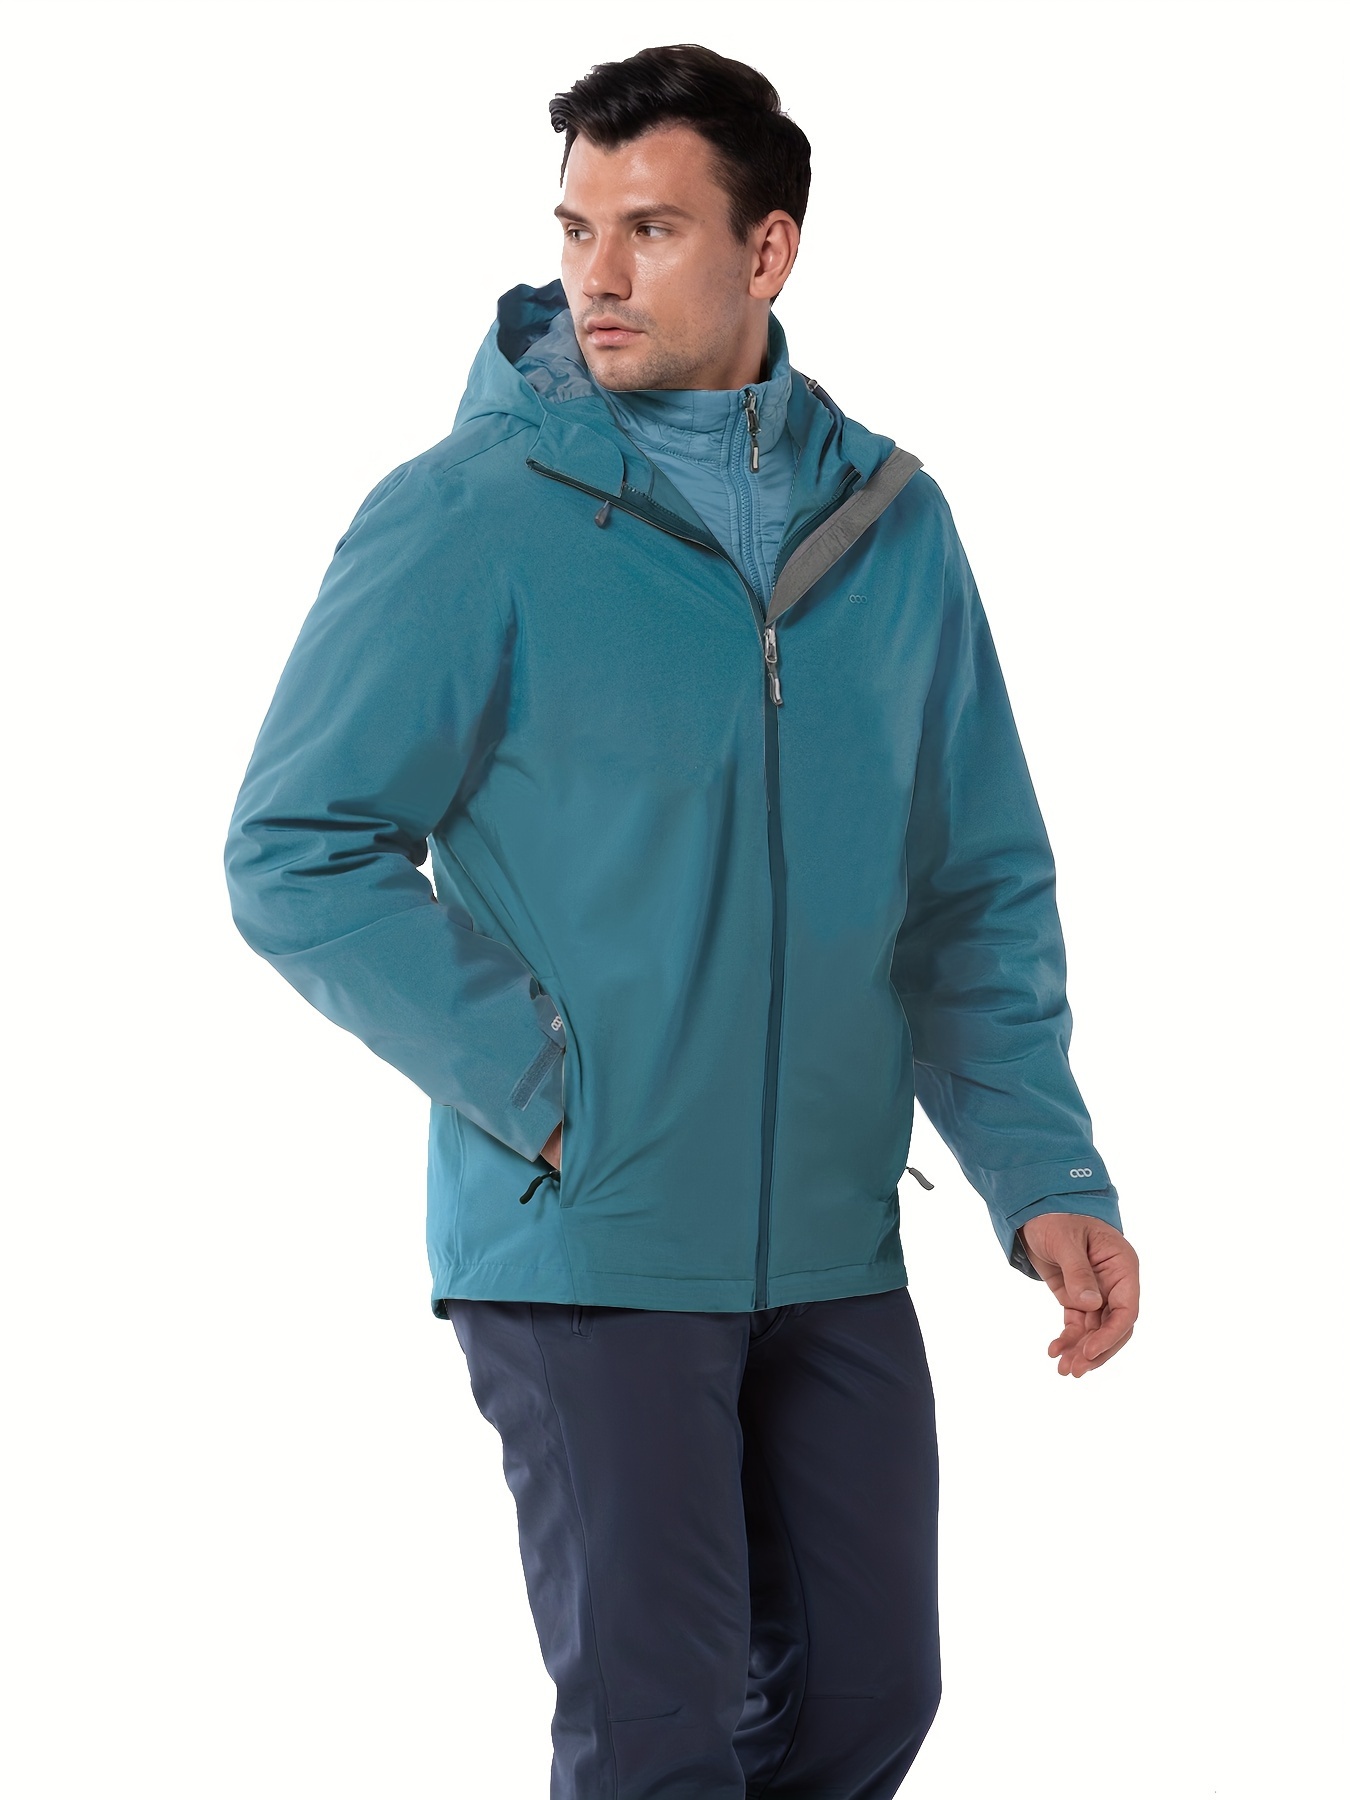 Men's 3 In 1 Casual Warm Outdoor Sports Zip Hooded Quilted Jacket, Waterproof Windproof Hiking Jacket For Autumn Winter